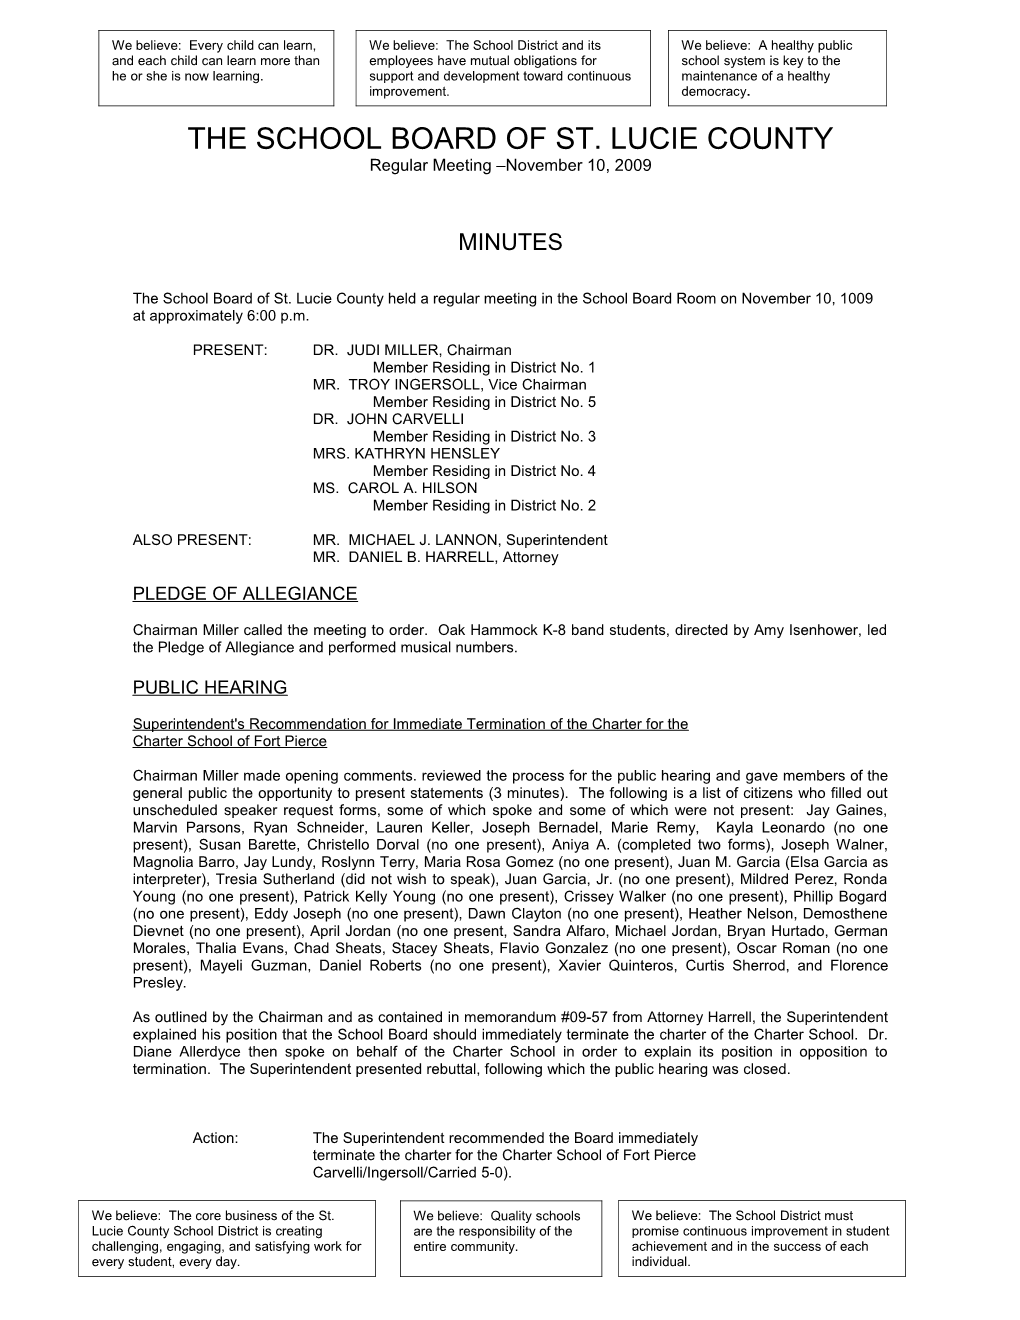 11-10-09 SLCSB Regular Meeting Minutes